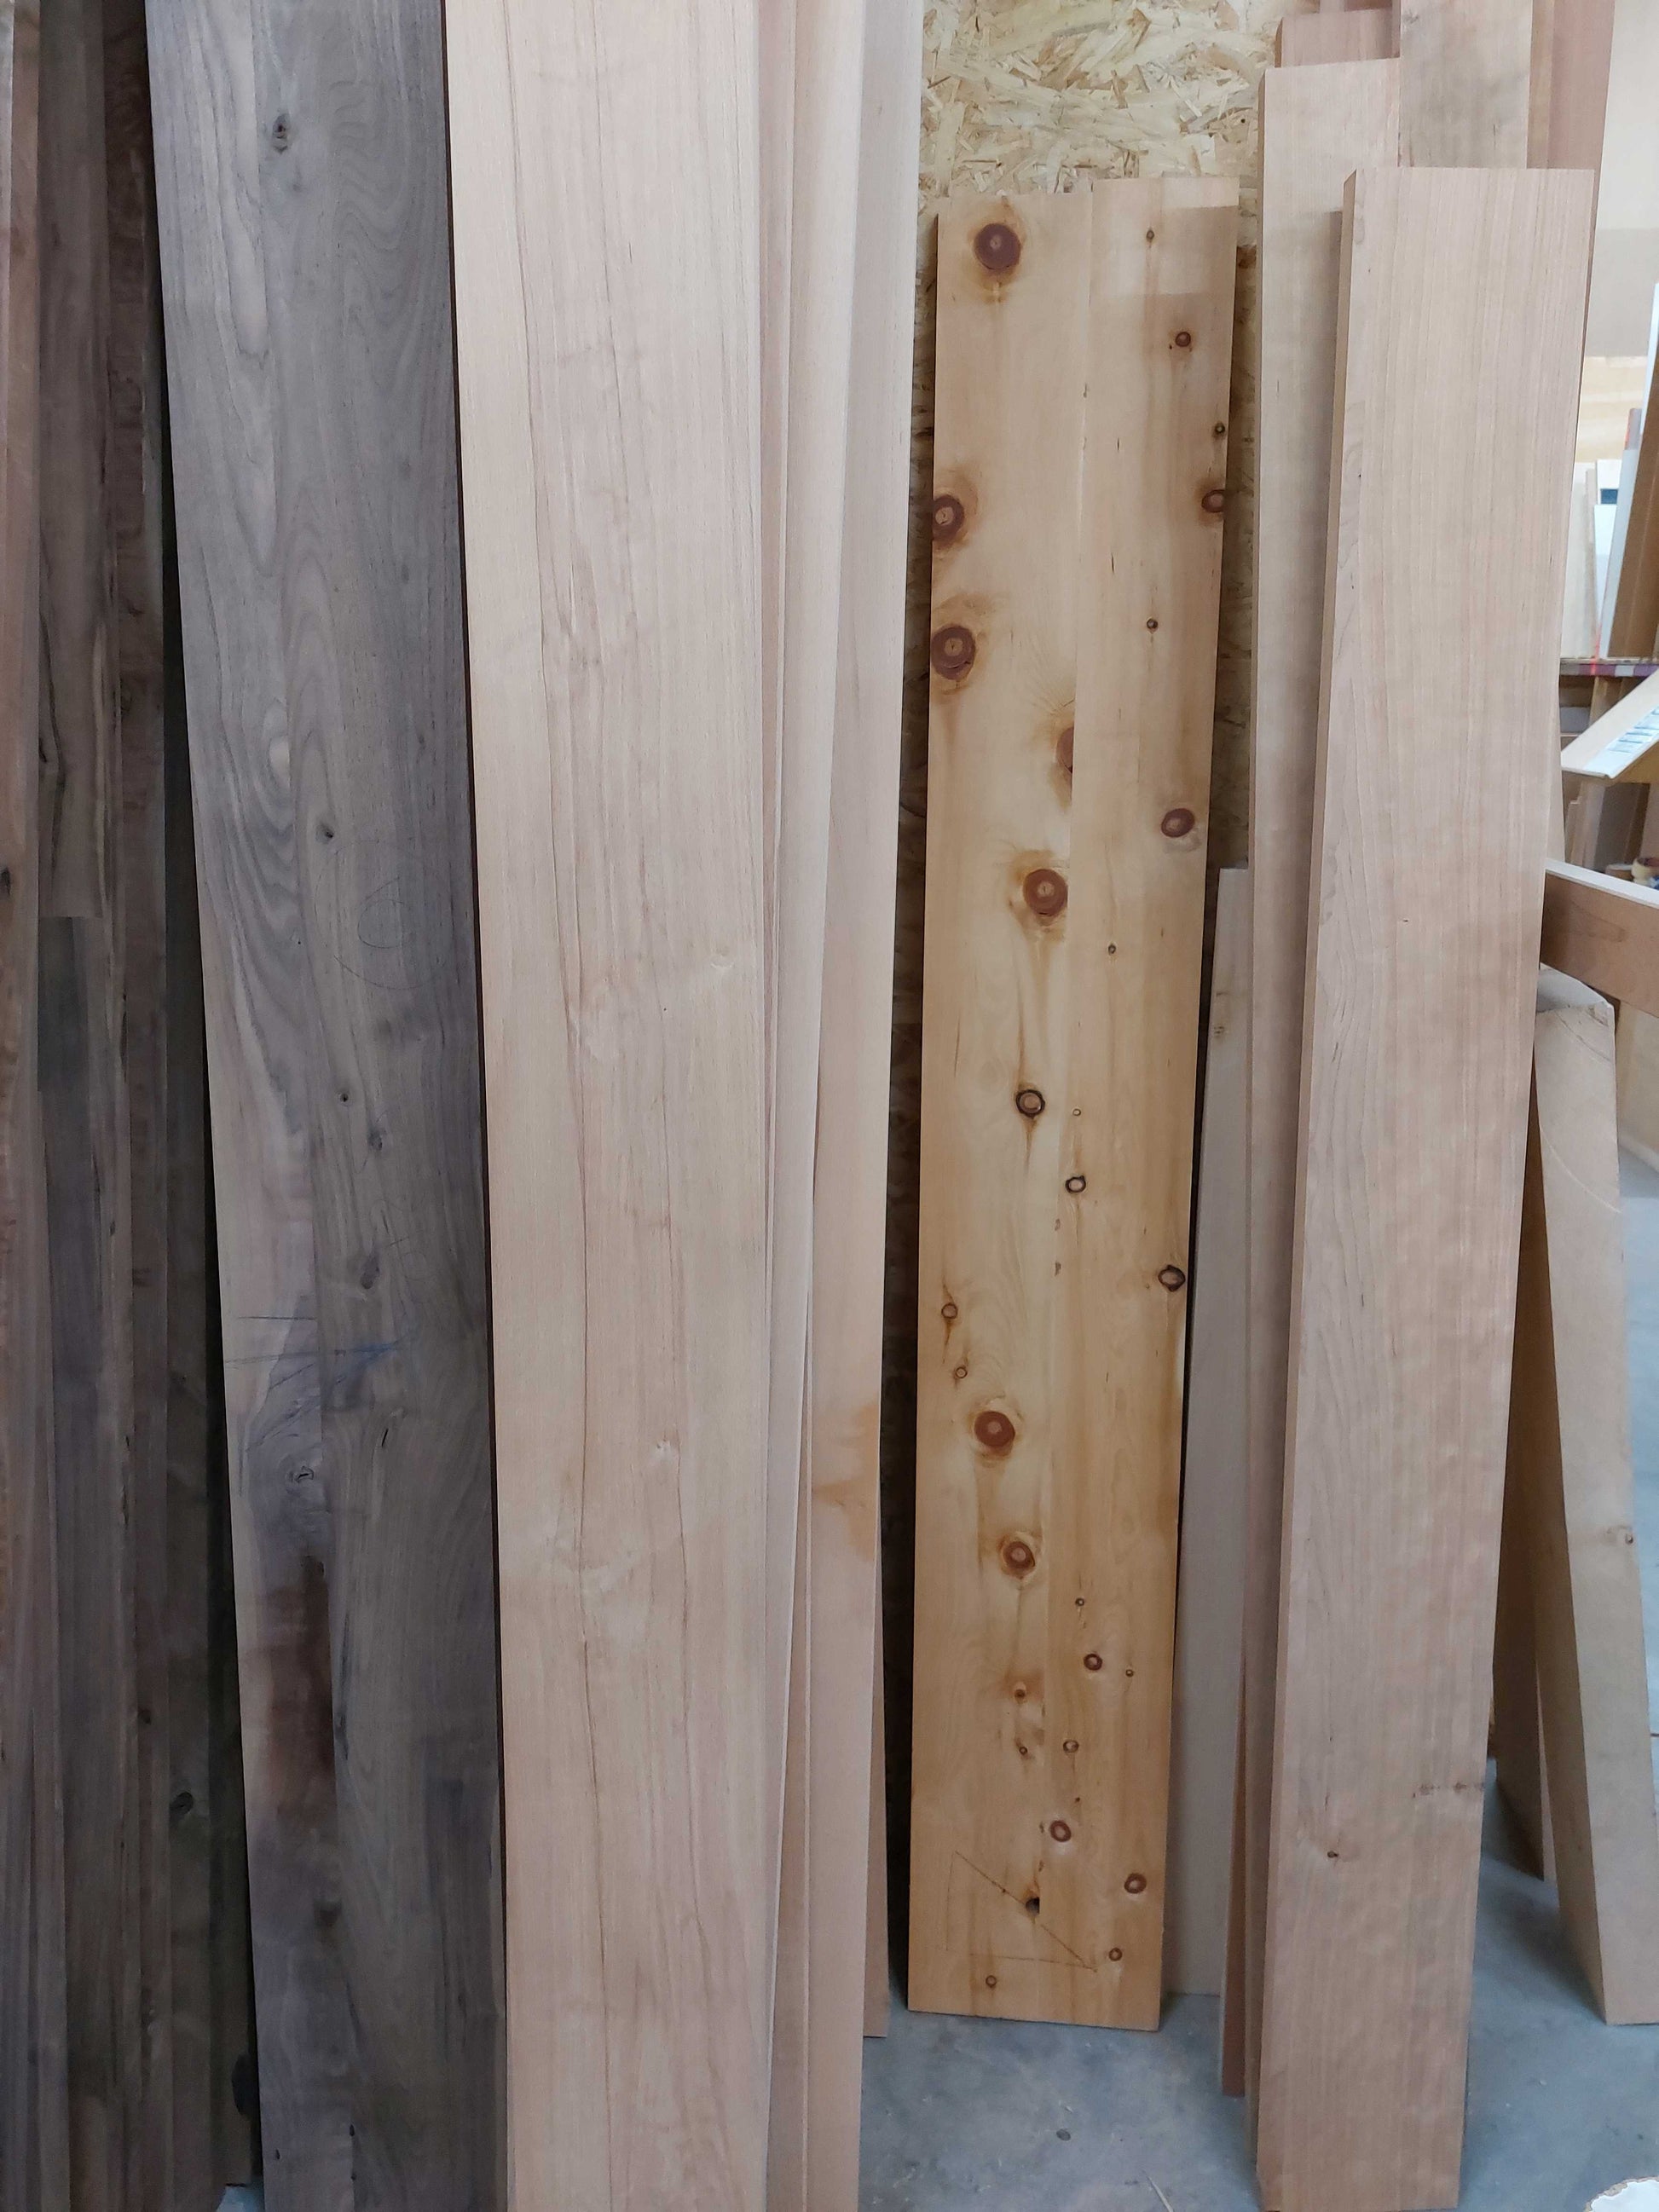 Holzmanufaktur Zuschnitt Zirbelkiefer Zuschnitt Stärke: 28 mm